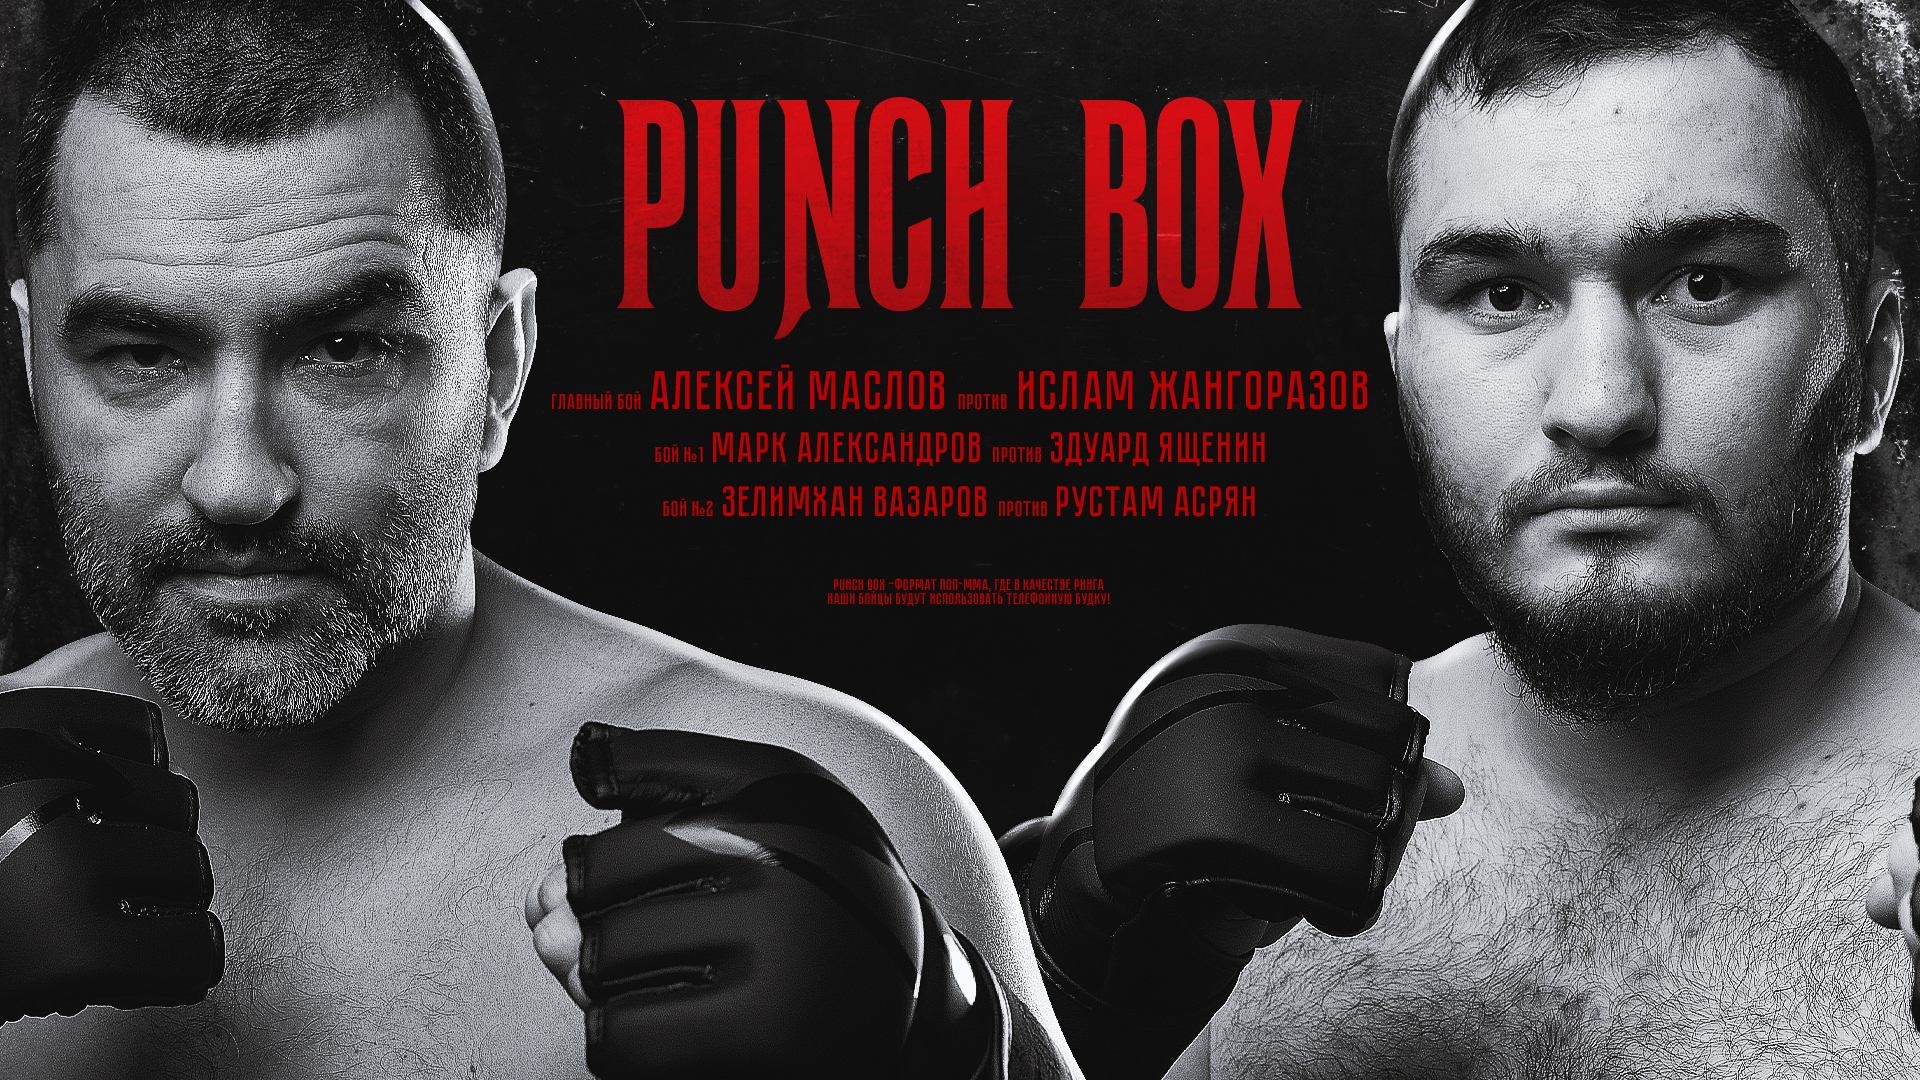 Punch Box. 3 сезон, 7 серия. Алексей Маслов vs Джанго